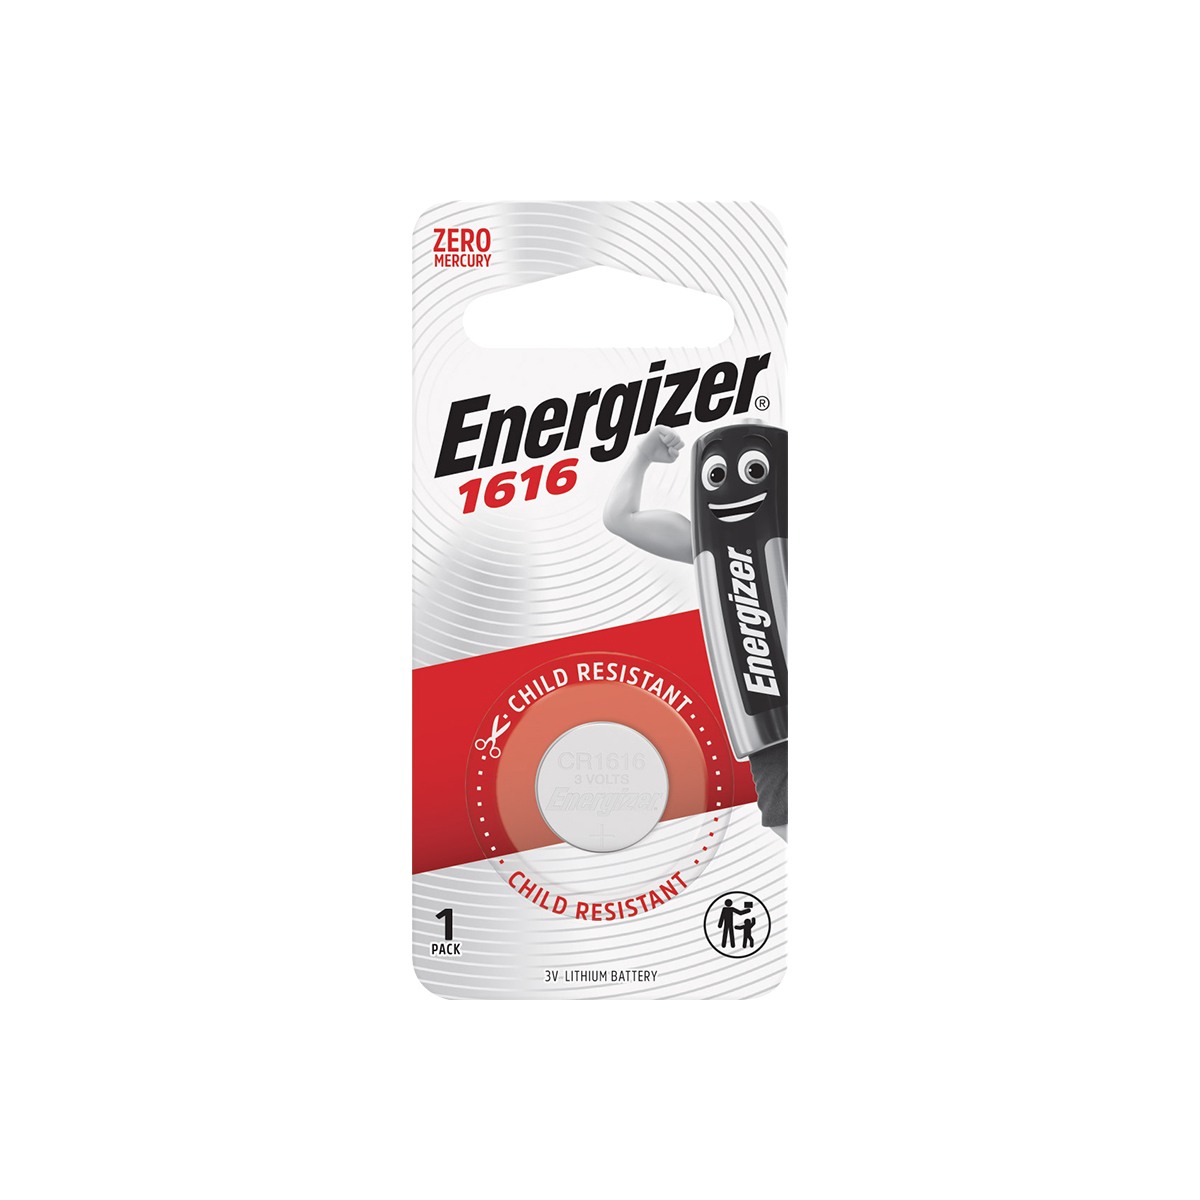 Energizer Lithium Battery CR1616 (1pk)